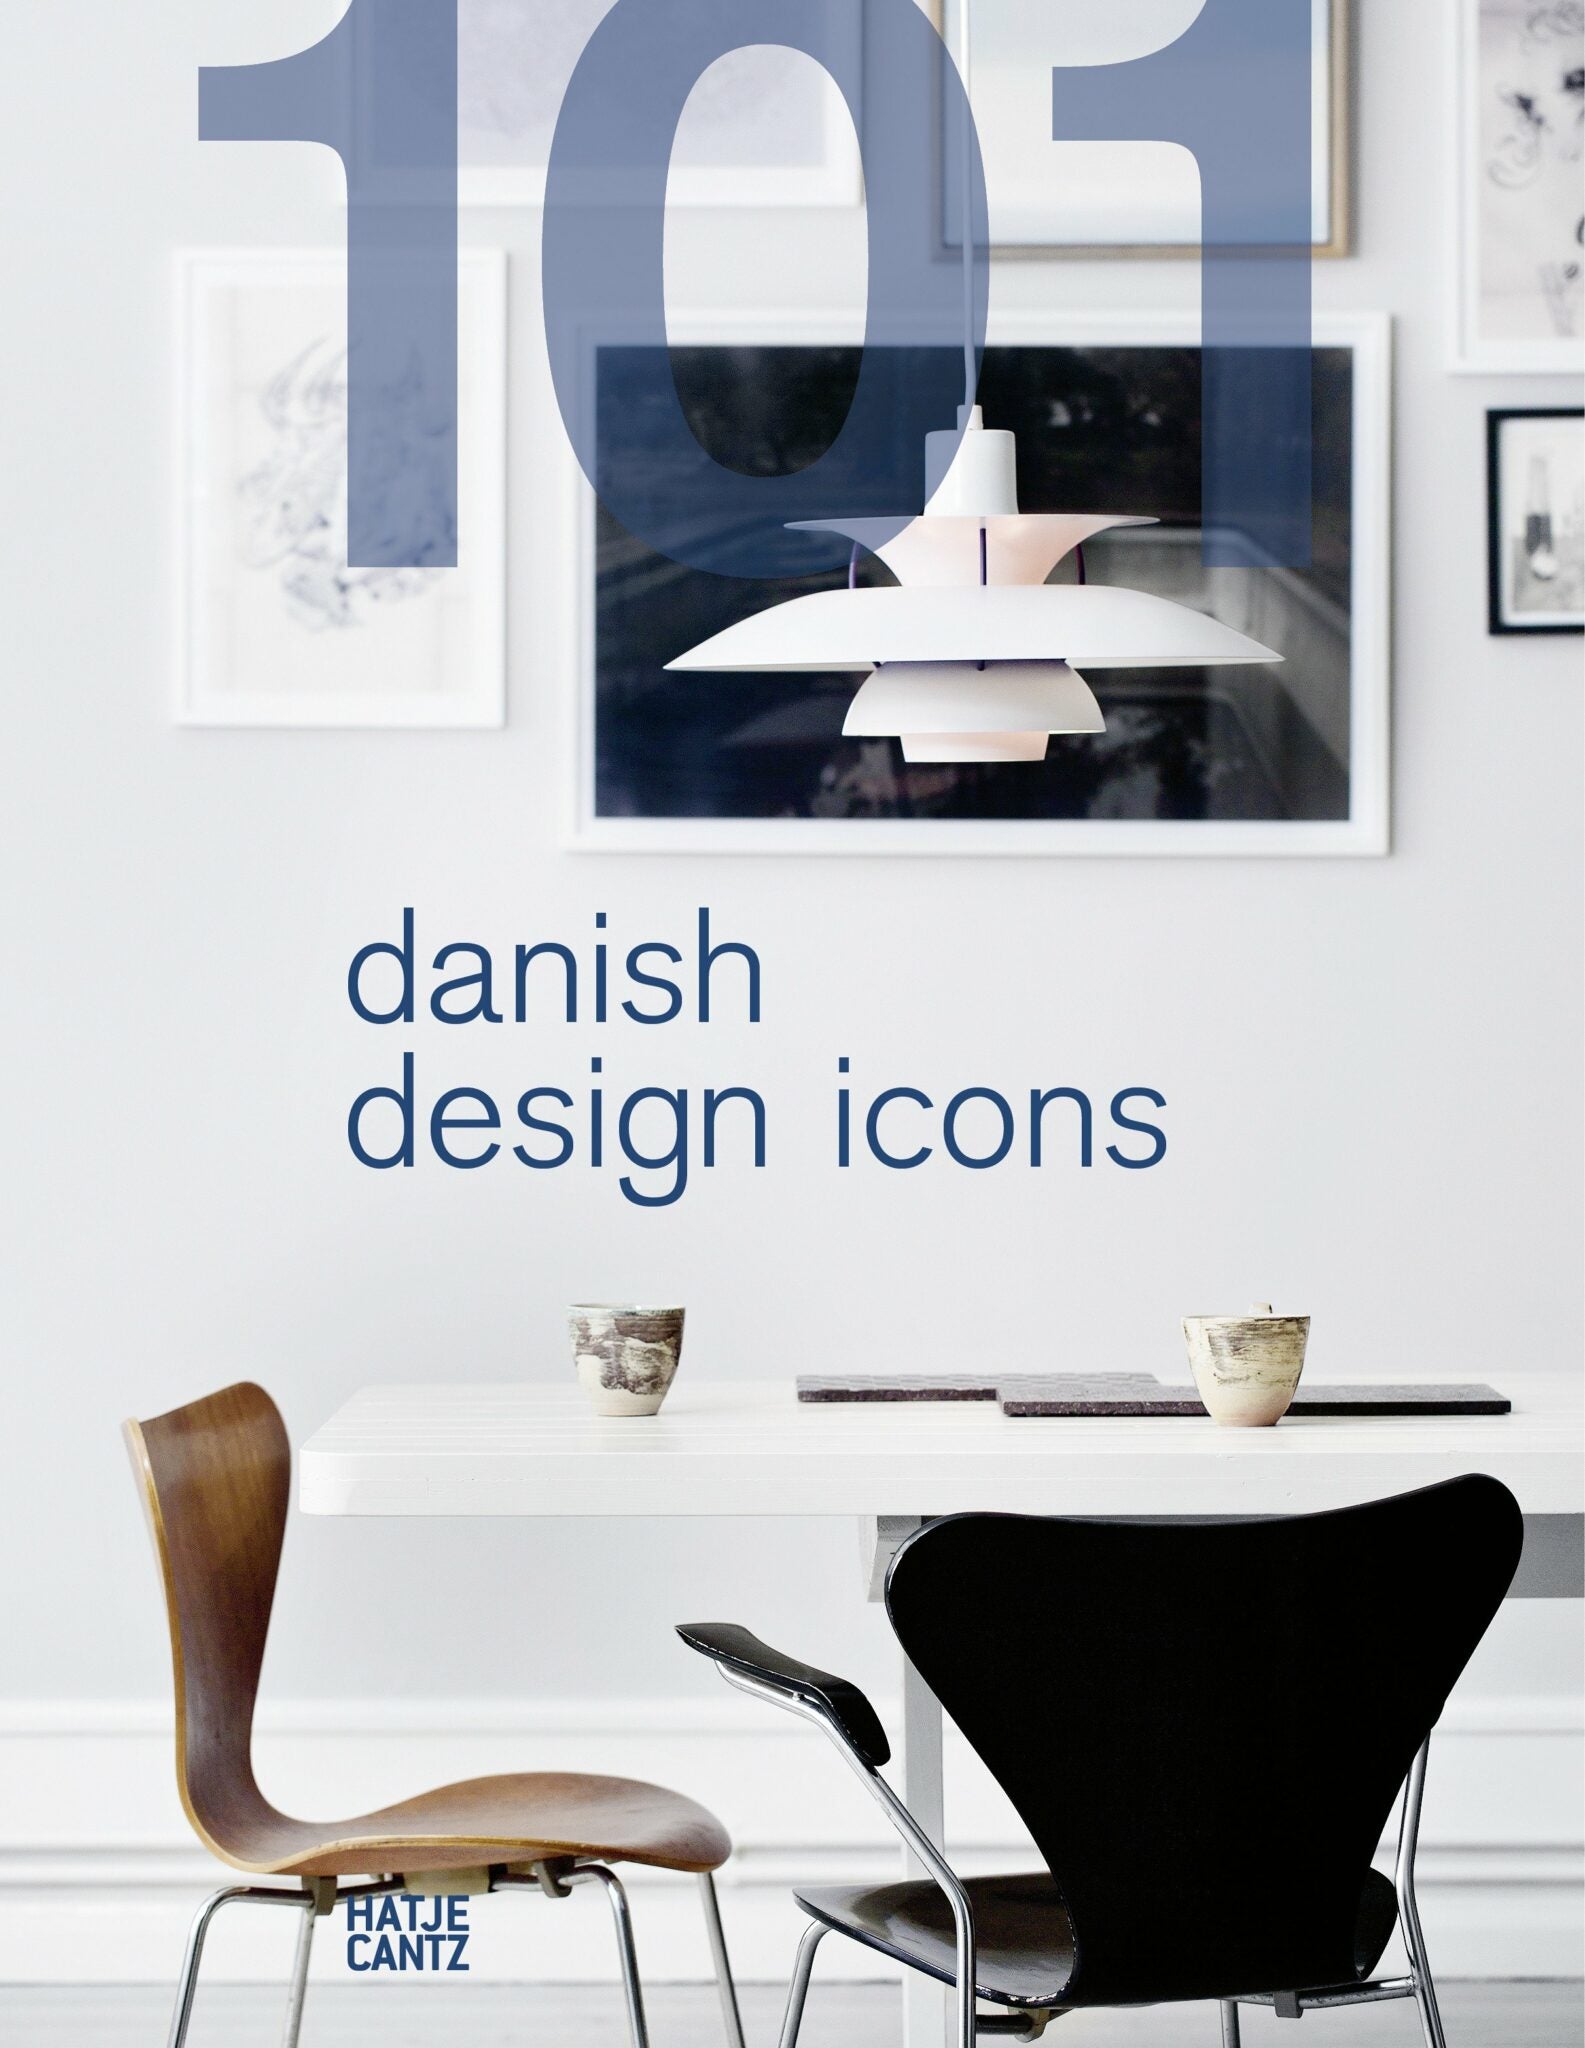 Hintsdeco Books Βιβλίο Τέχνης Βιβλίο Τέχνης 101 Danish Design Icons Μπλε/Άσπρο 20,5×3×26,5 cm Hintsdeco